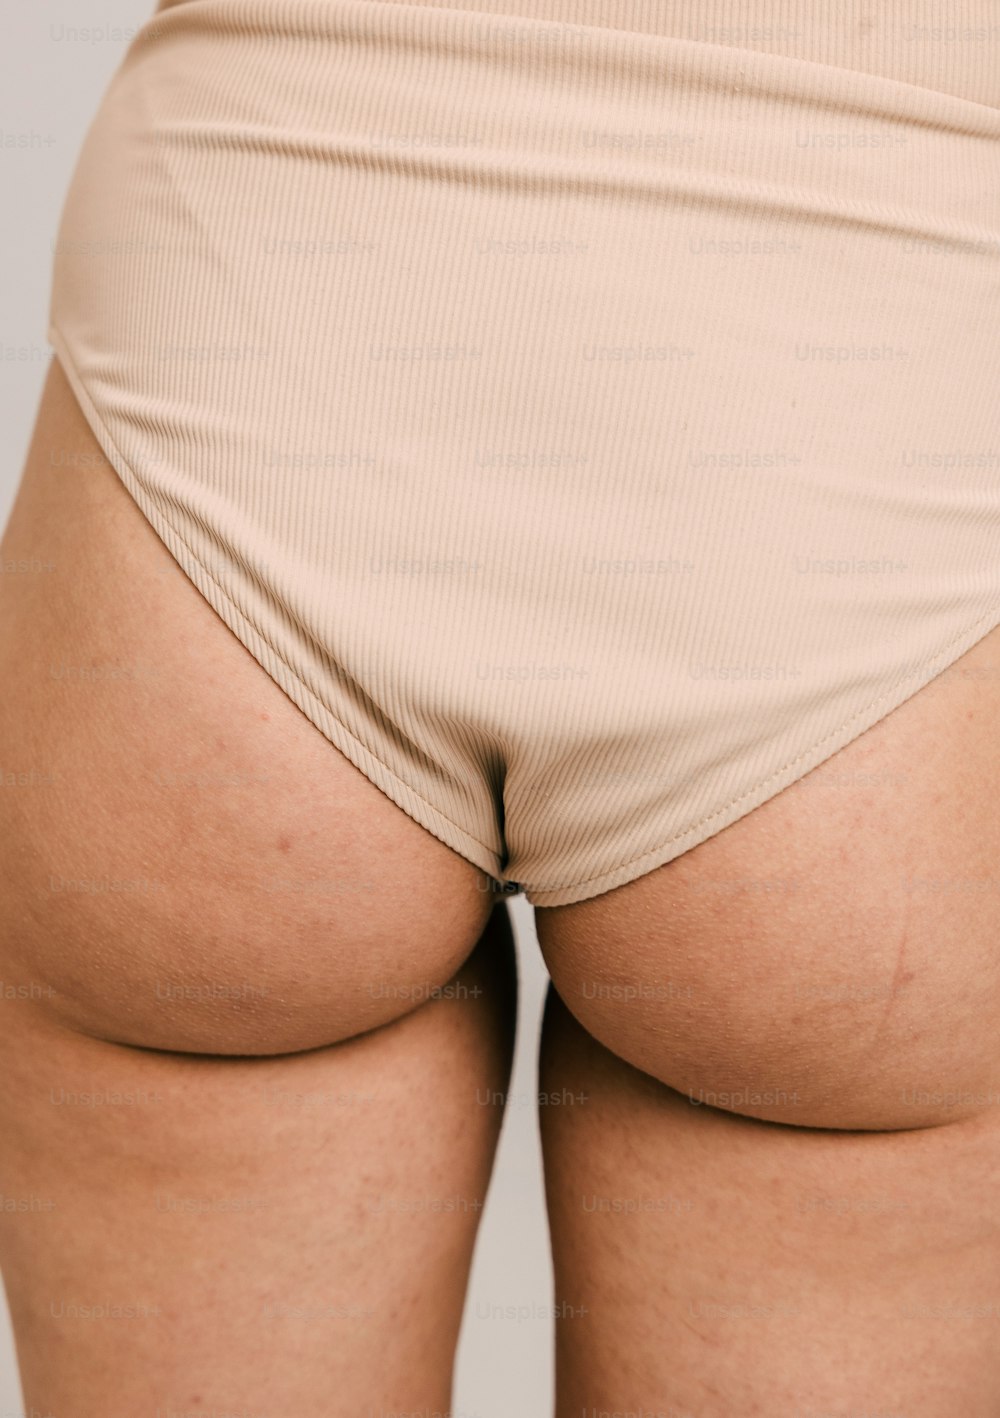 Premium Photo  Closeup picture of woman in cotton underwear